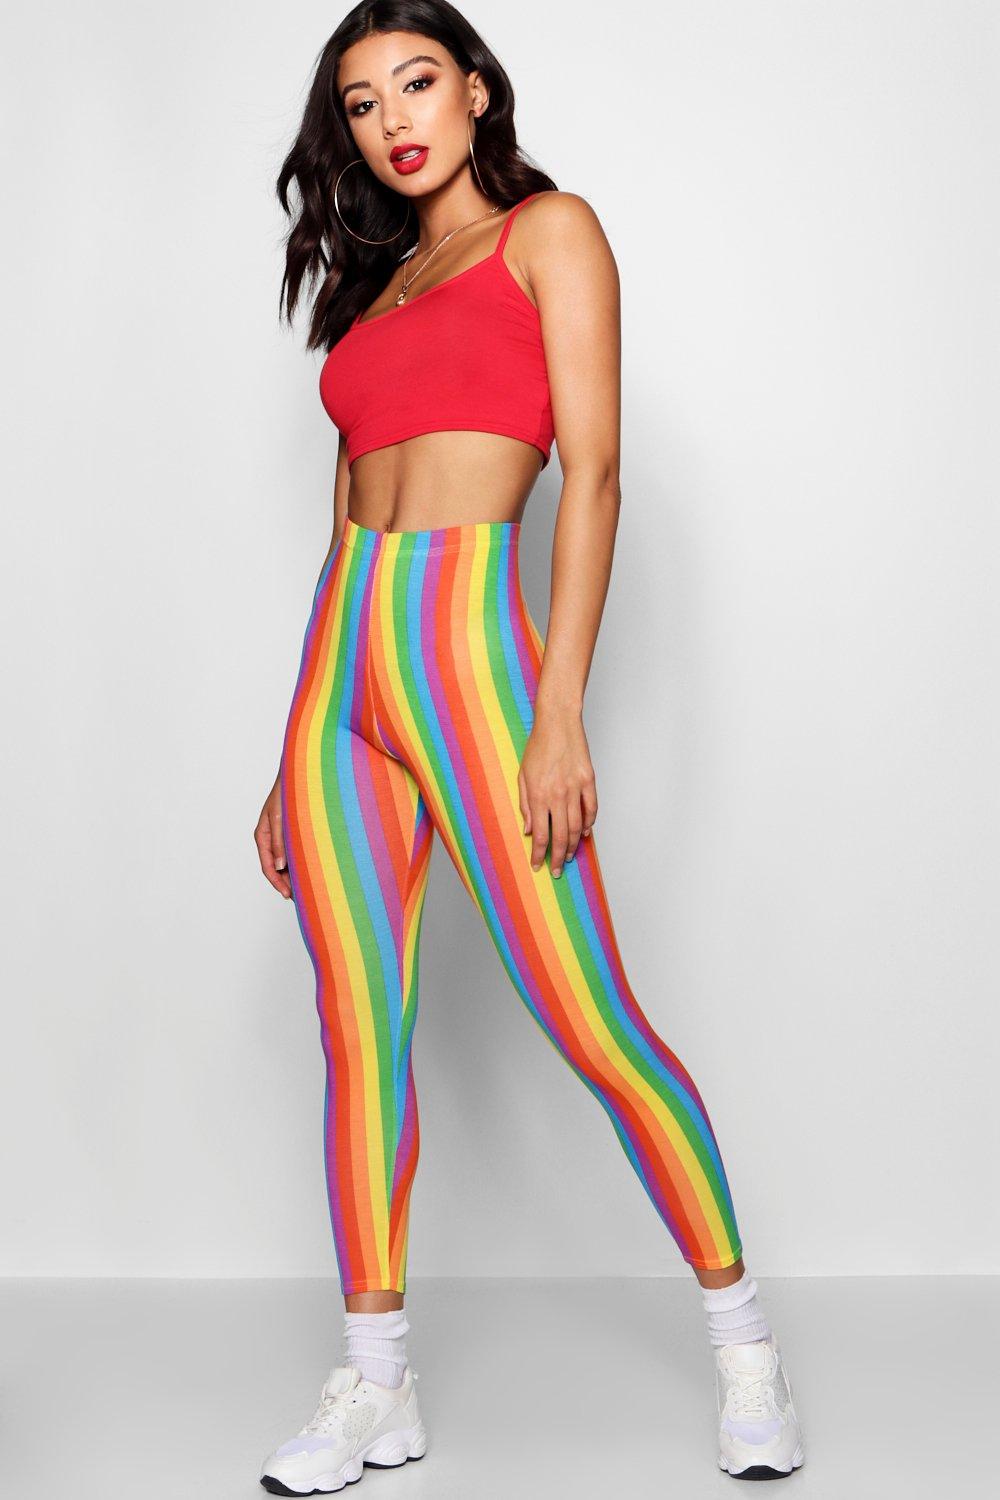 rainbow sports leggings